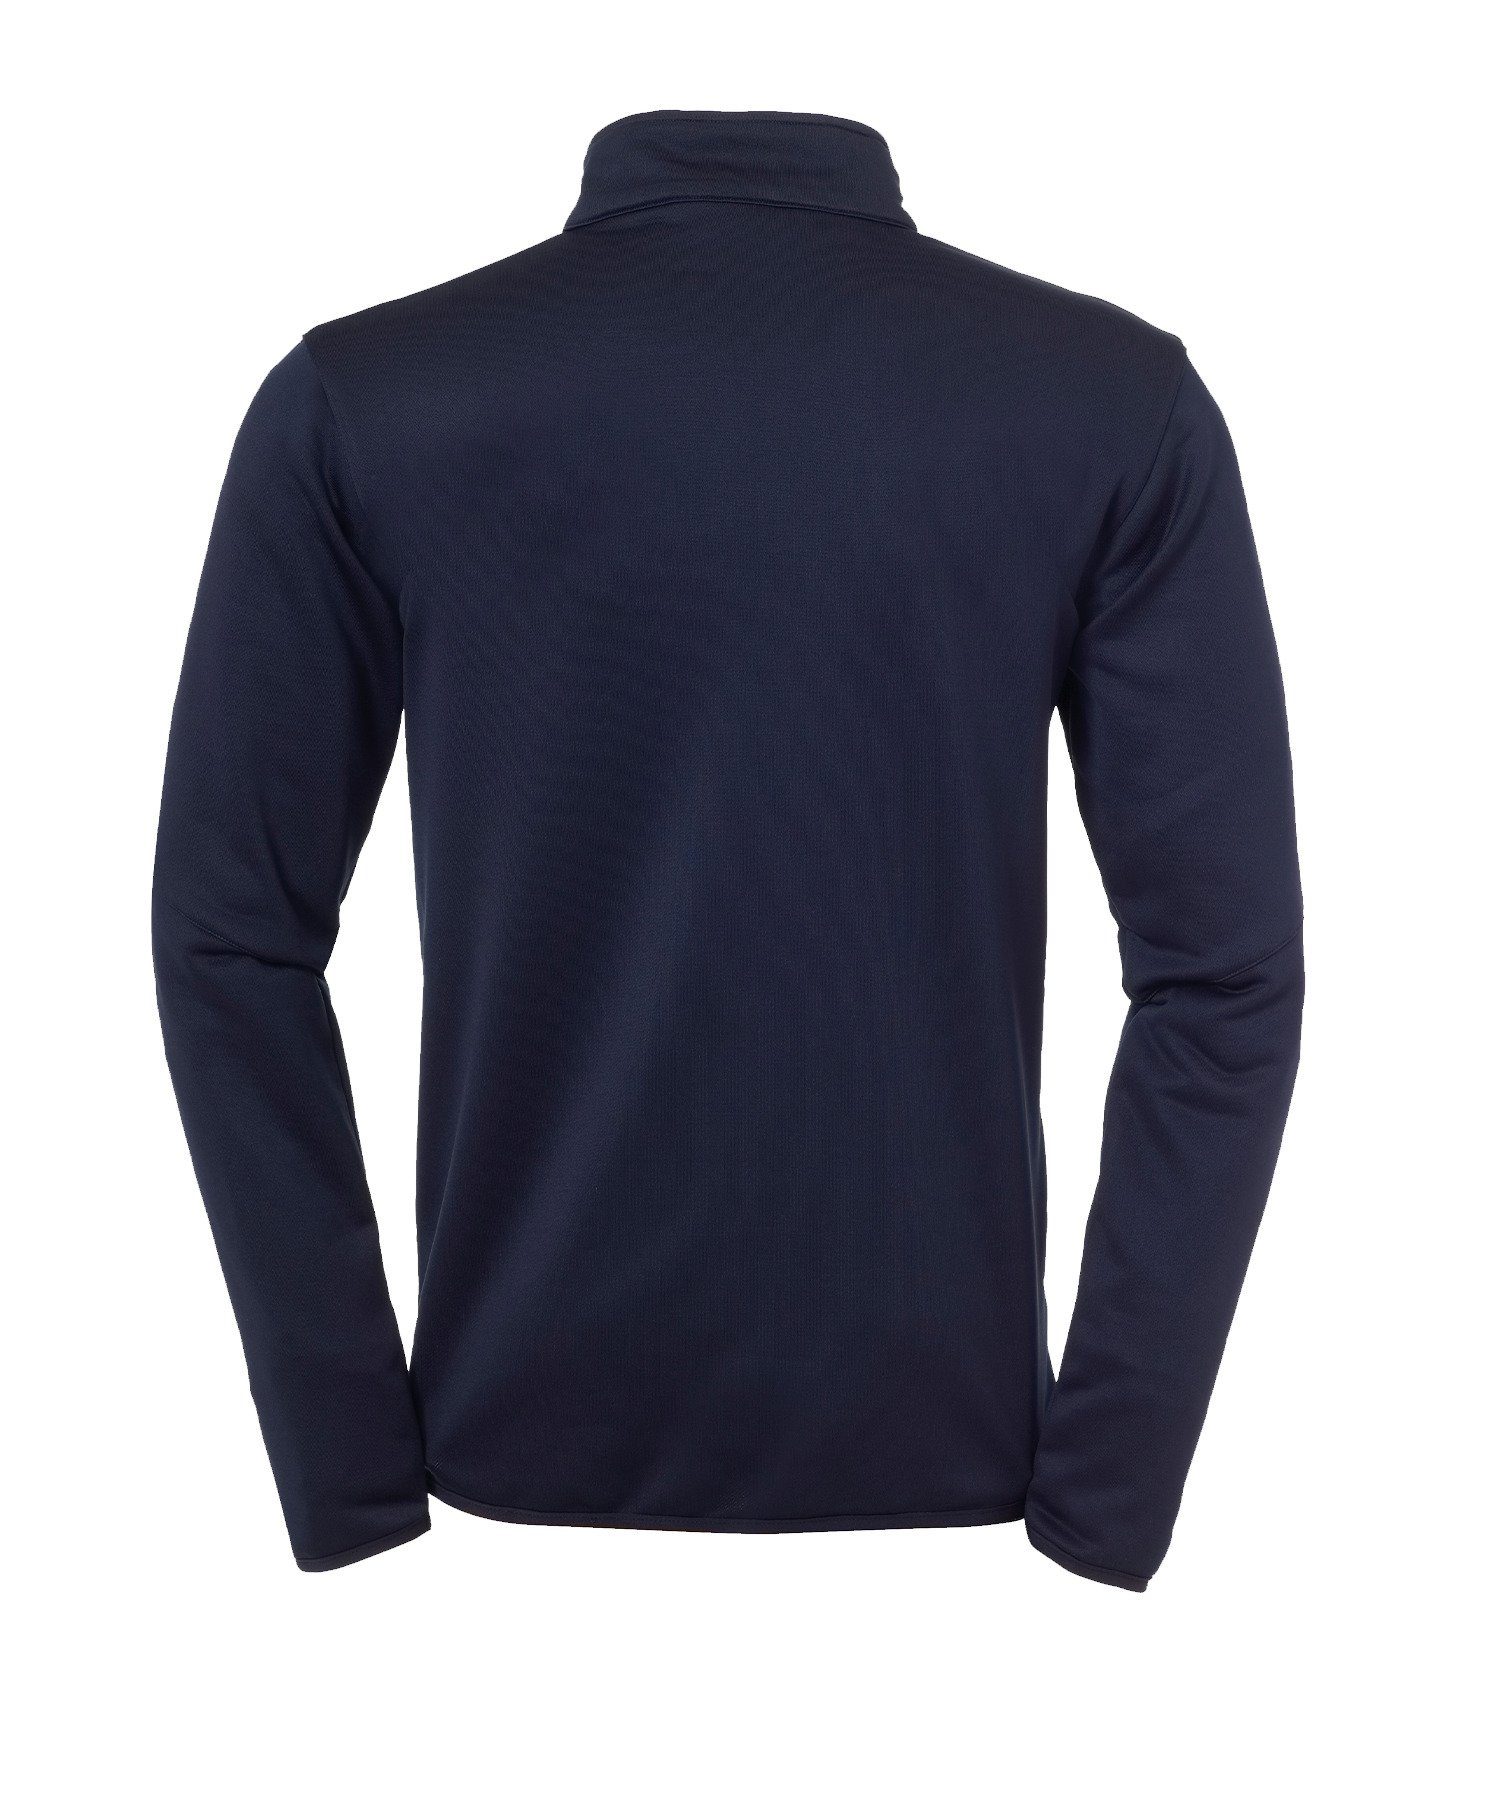 uhlsport Sweatshirt Stream Blau Ziptop 22